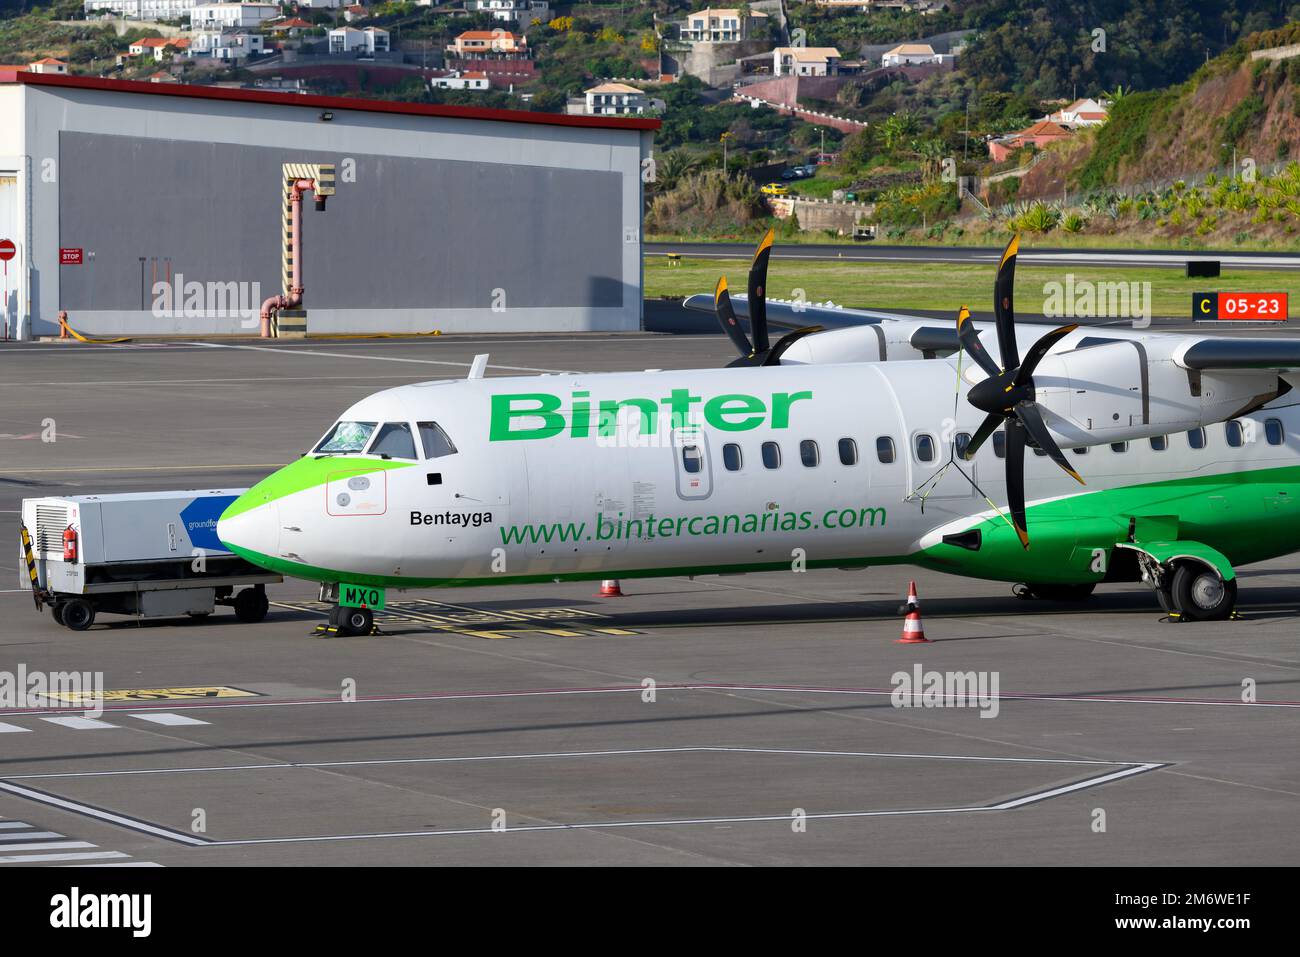 Binter Canarias ATR 72 aircraft parked at Madeira, Portugal. Airplane ATR 72-600 of airline Binter Canarias. Stock Photo